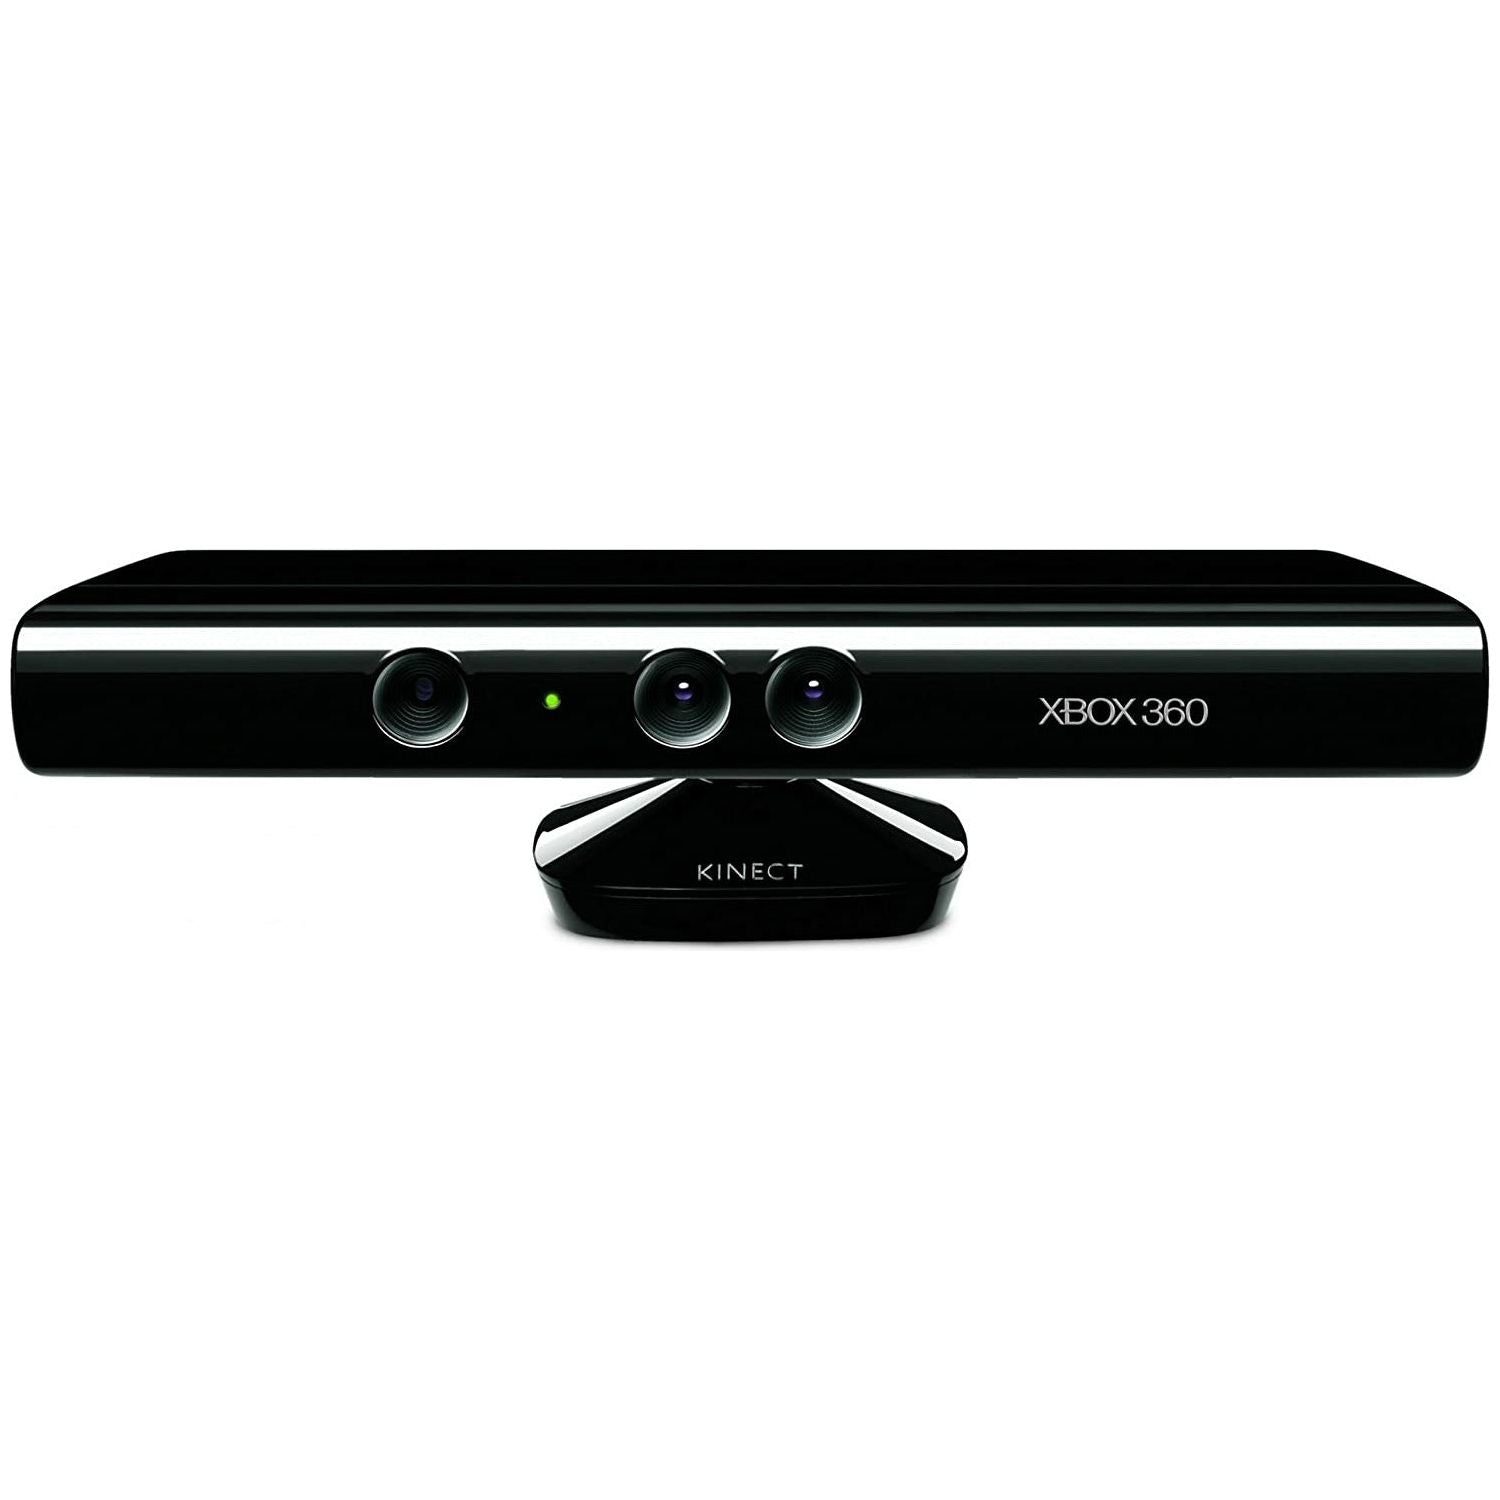 Kinect Sensor for XBOX 360 (Black)